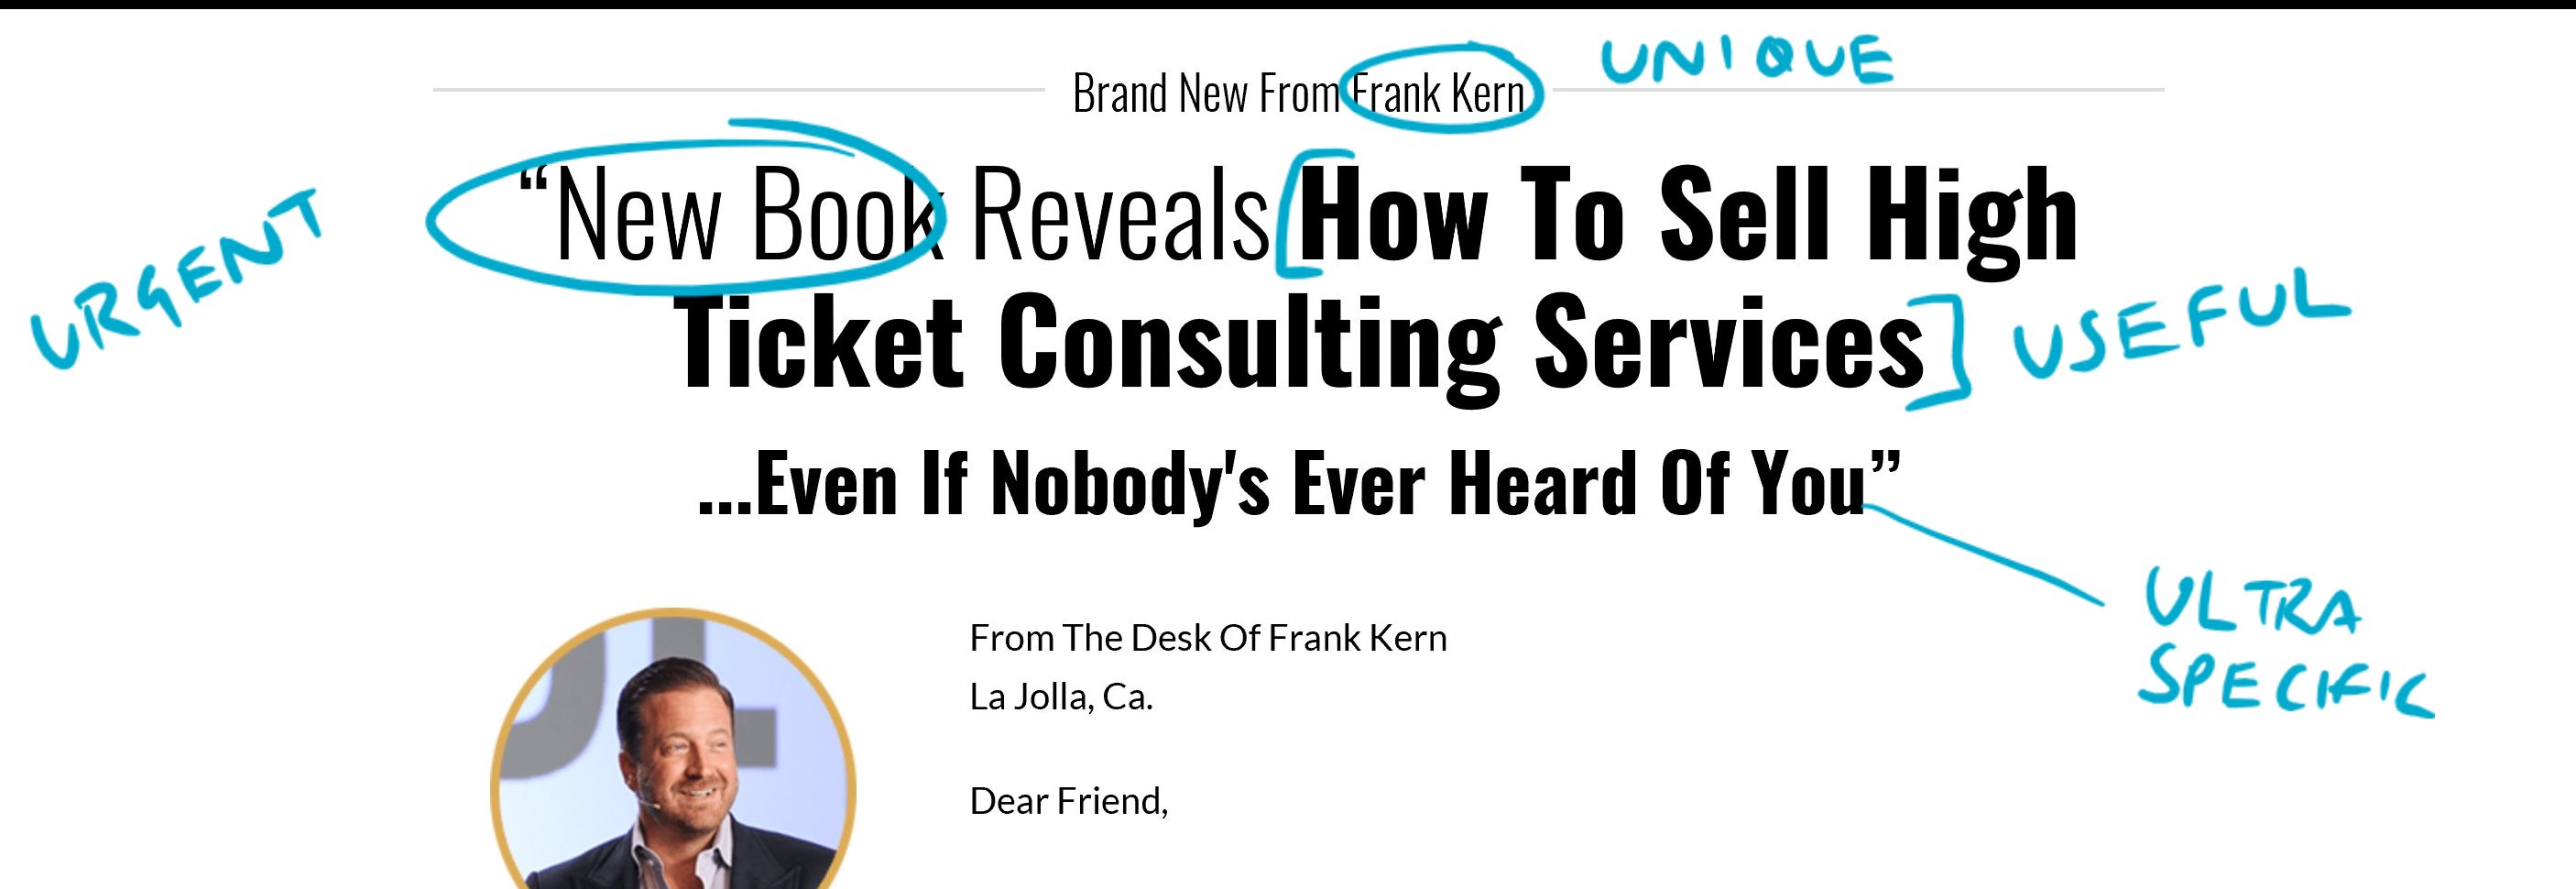 Frank Kern sales funnel, Frank Kern sales letter marketing funnel, Frank Kern sales copy, sales copywriting